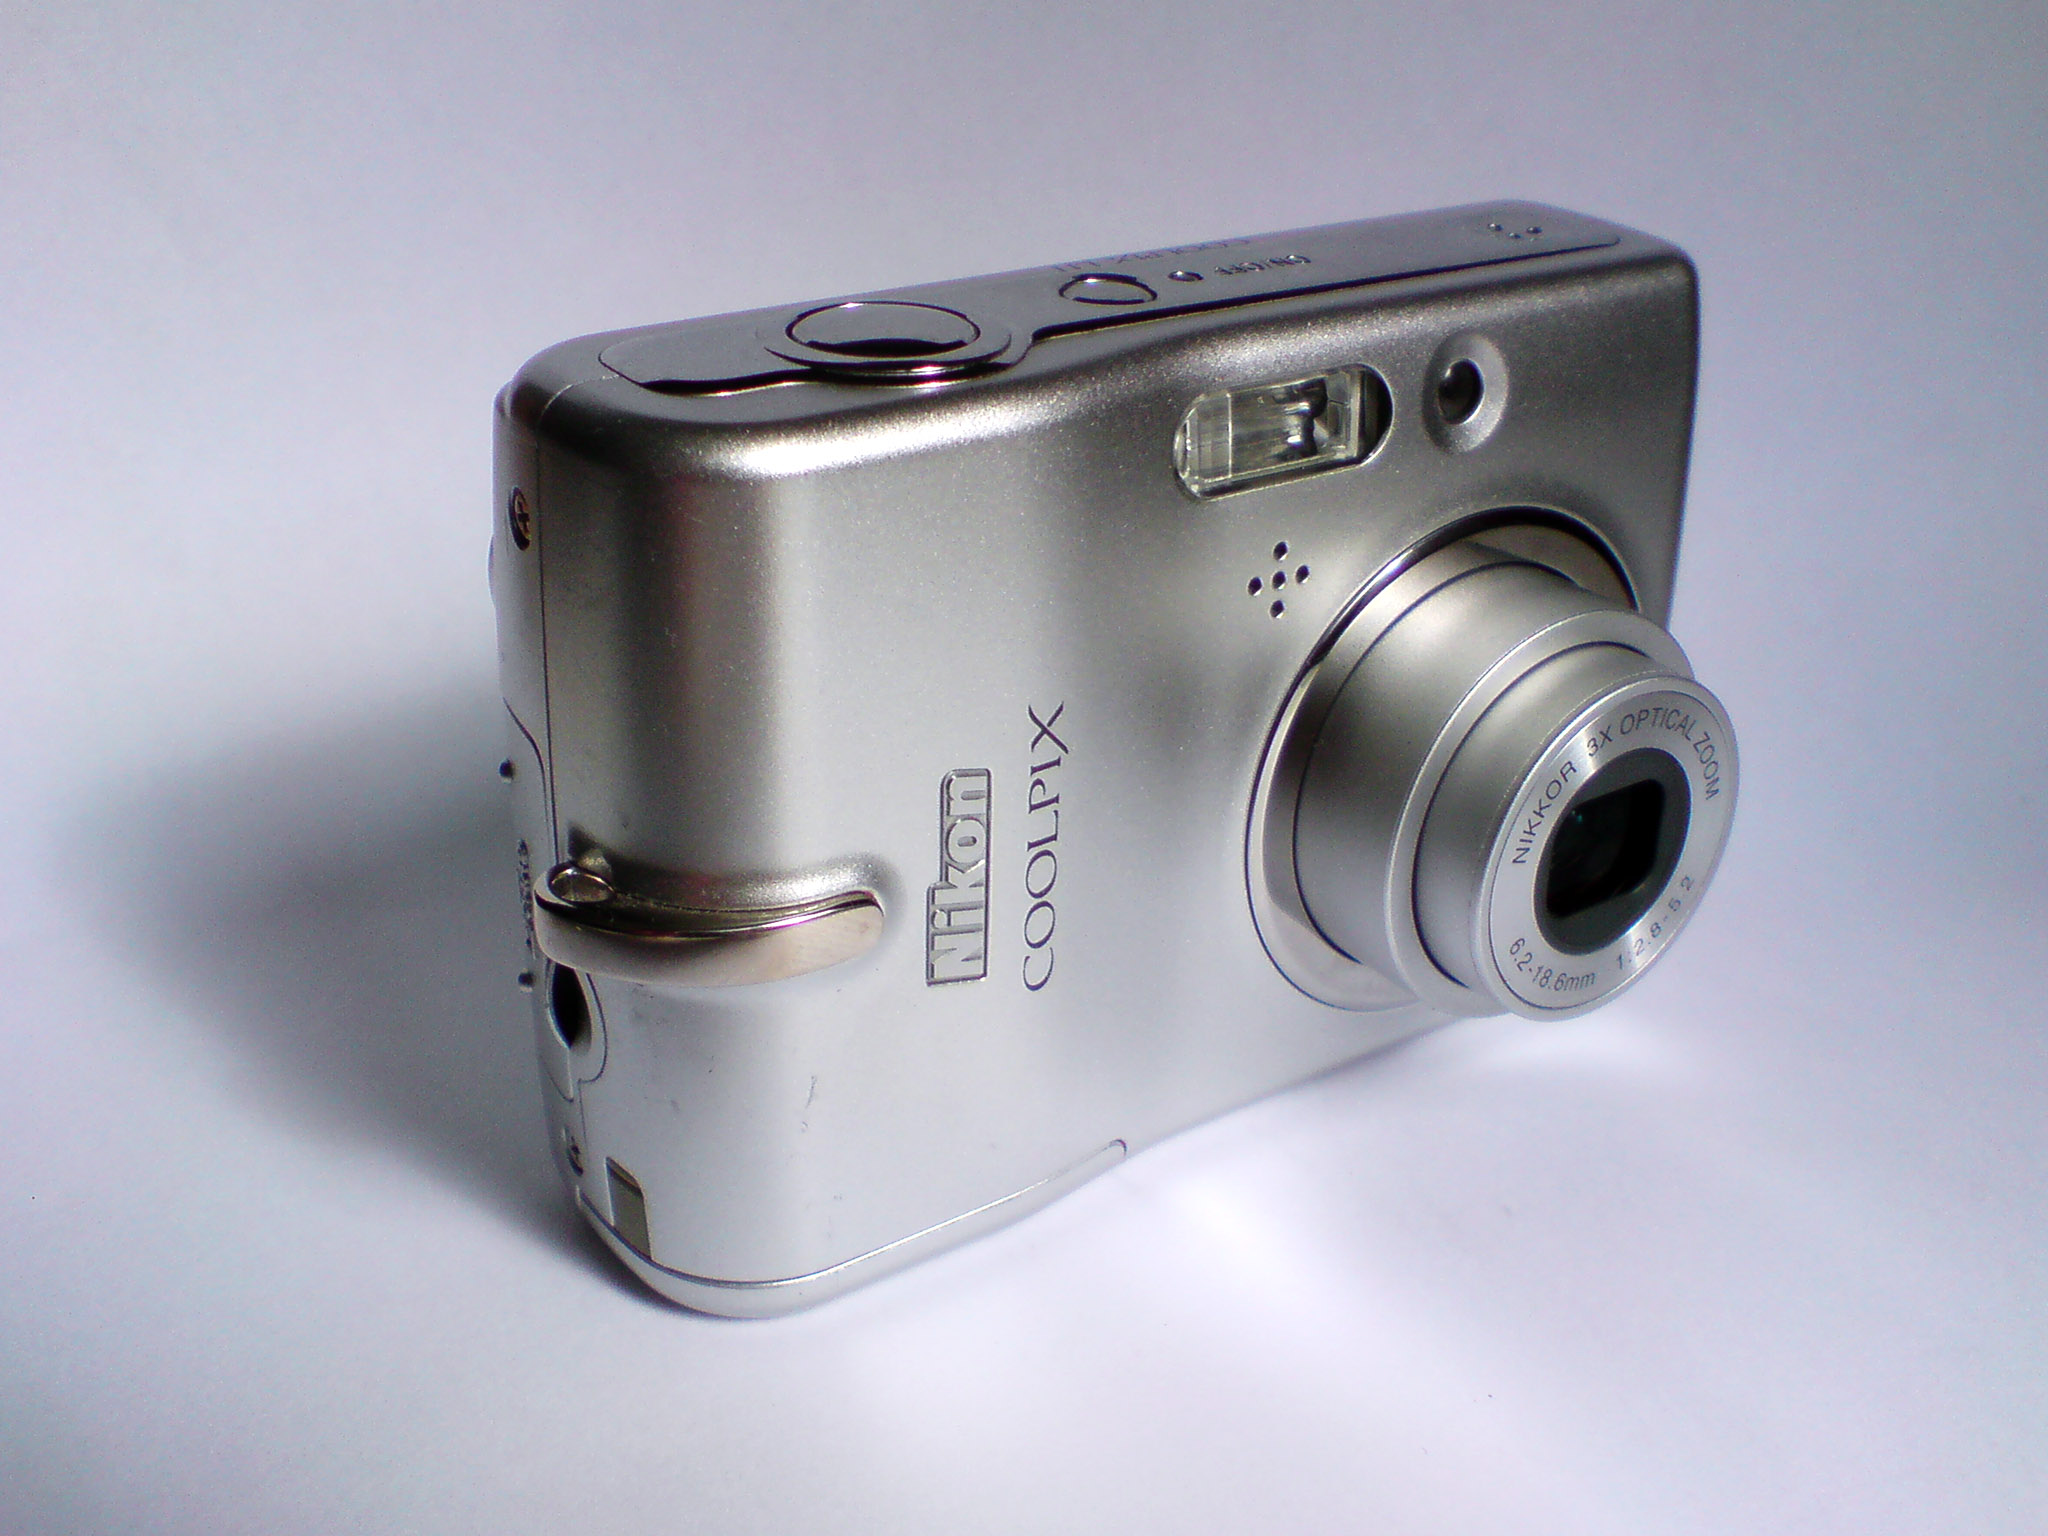 Nikon Coolpix L11 Point and Shoot Digital Camera